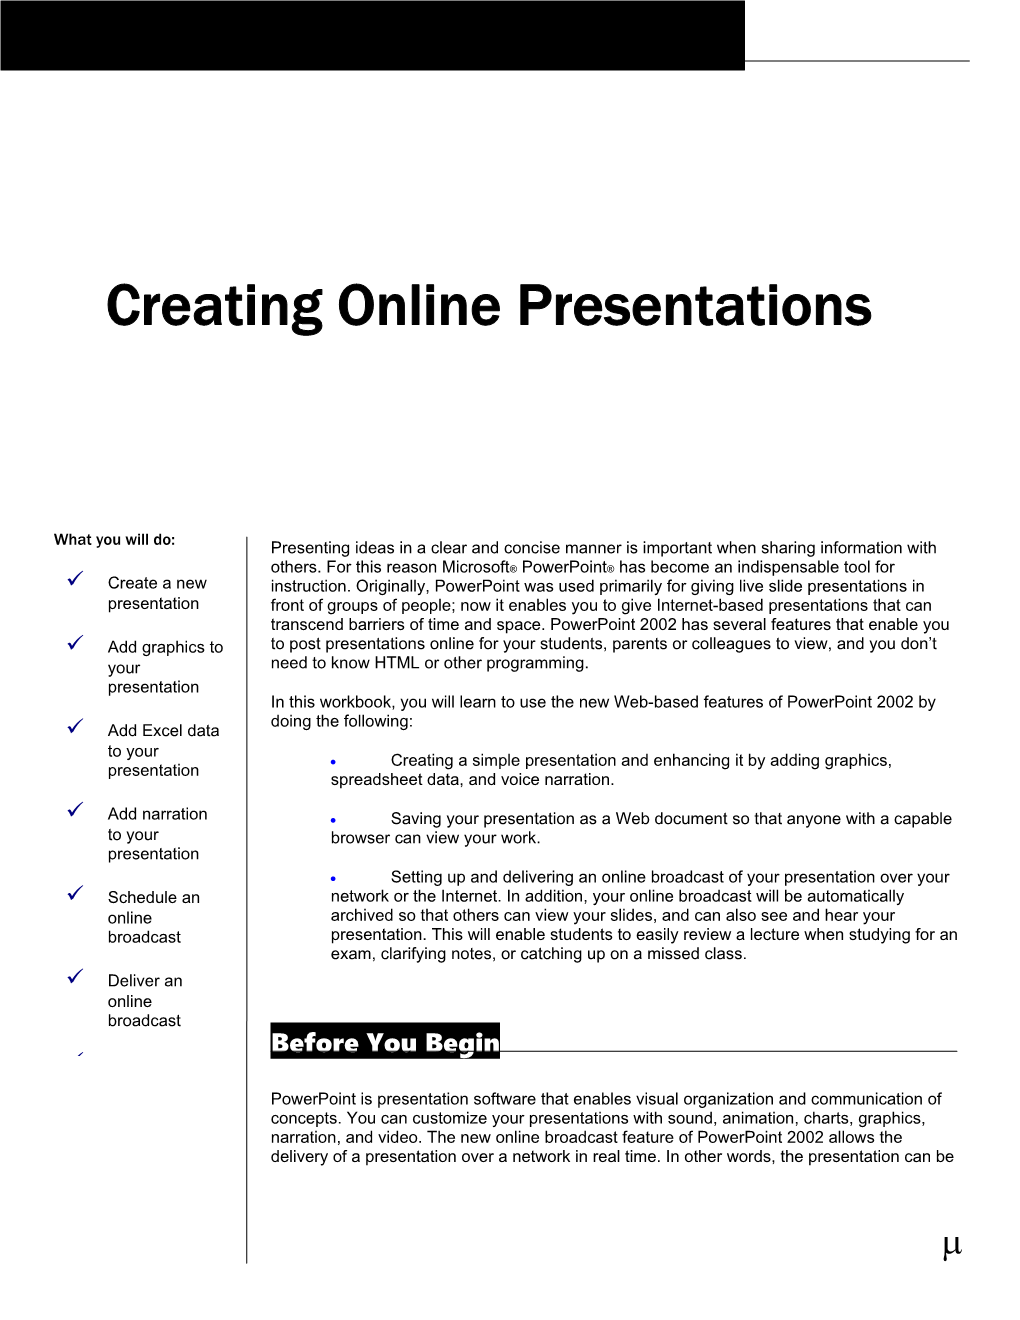 Ceating Online Presentations